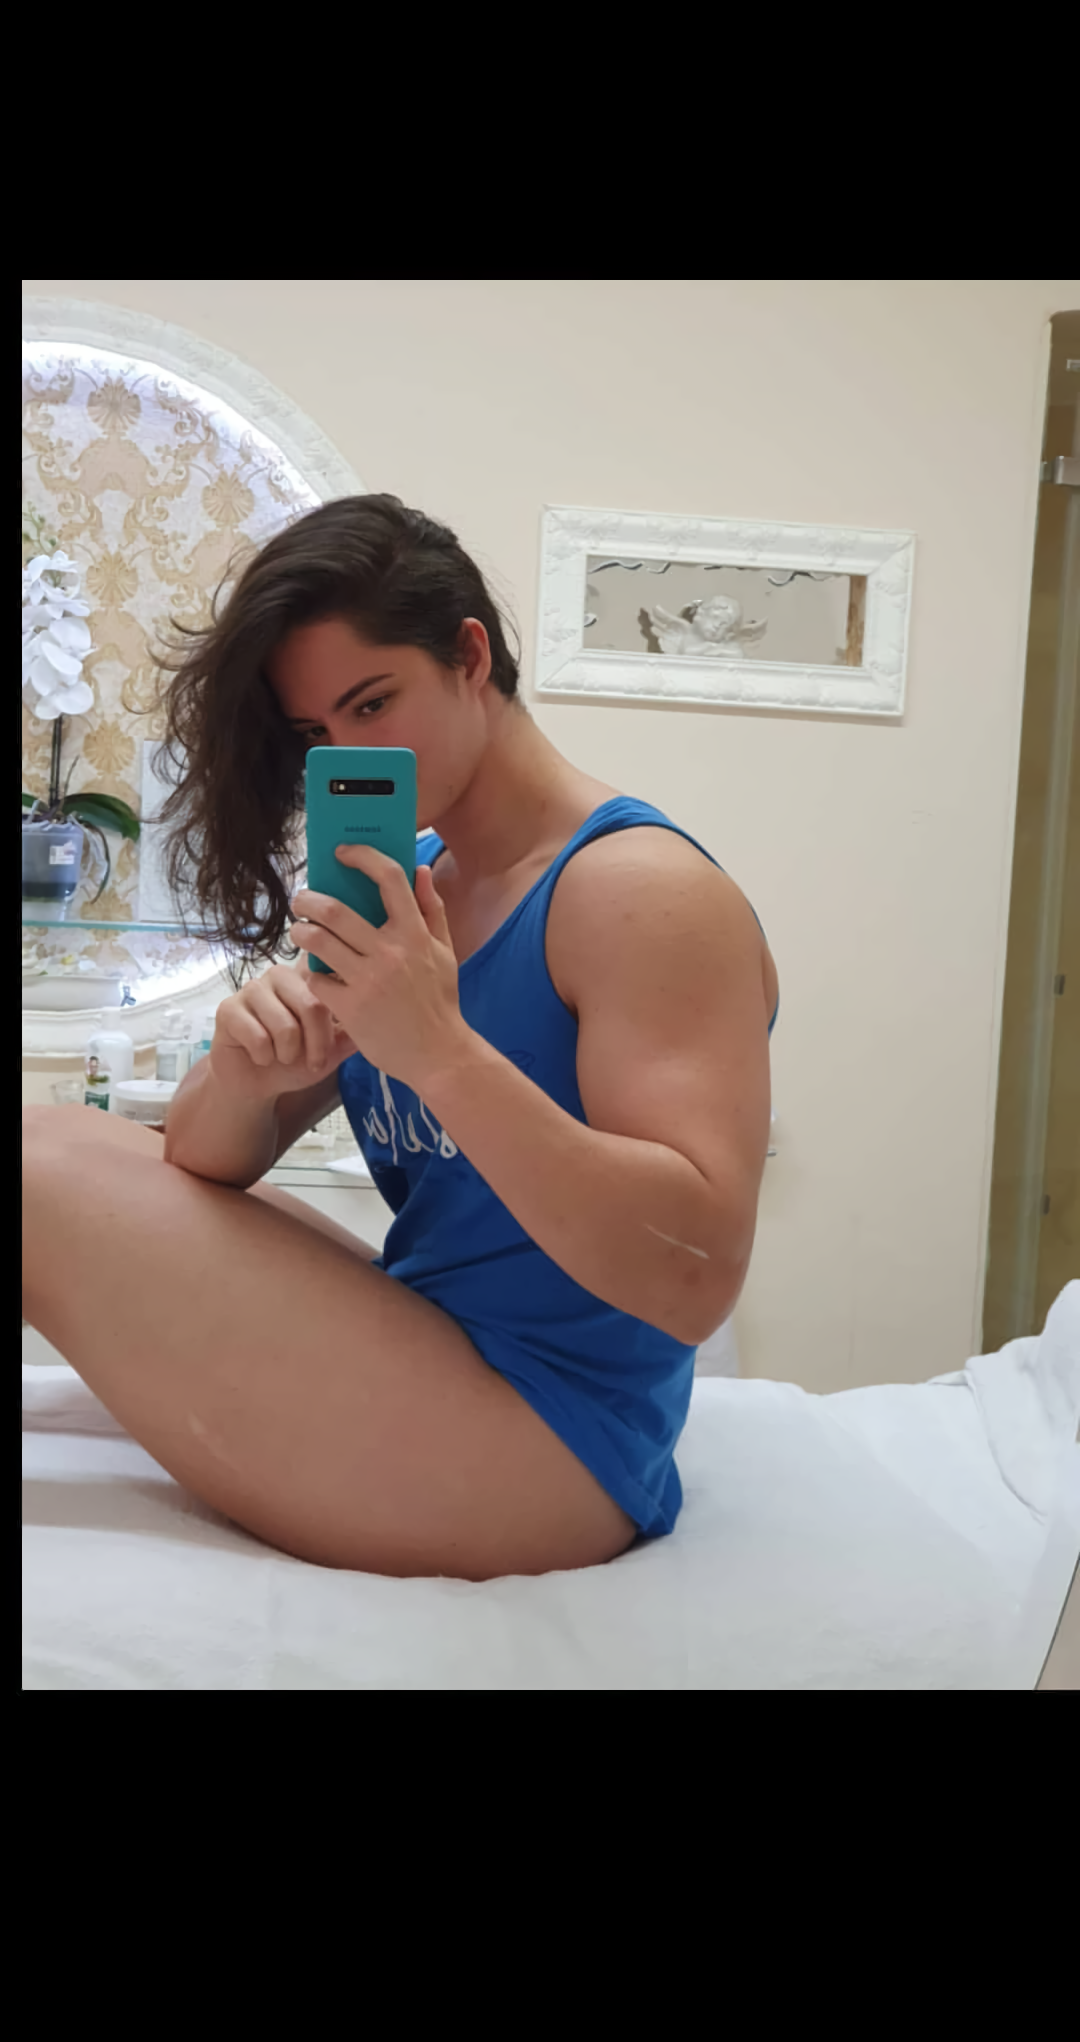 Slava Galagan (@vladigalagan) - Slava Galagan, Strong girl, Girls, The photo, Sports girls, Body-building, Bodybuilders, Video, Longpost